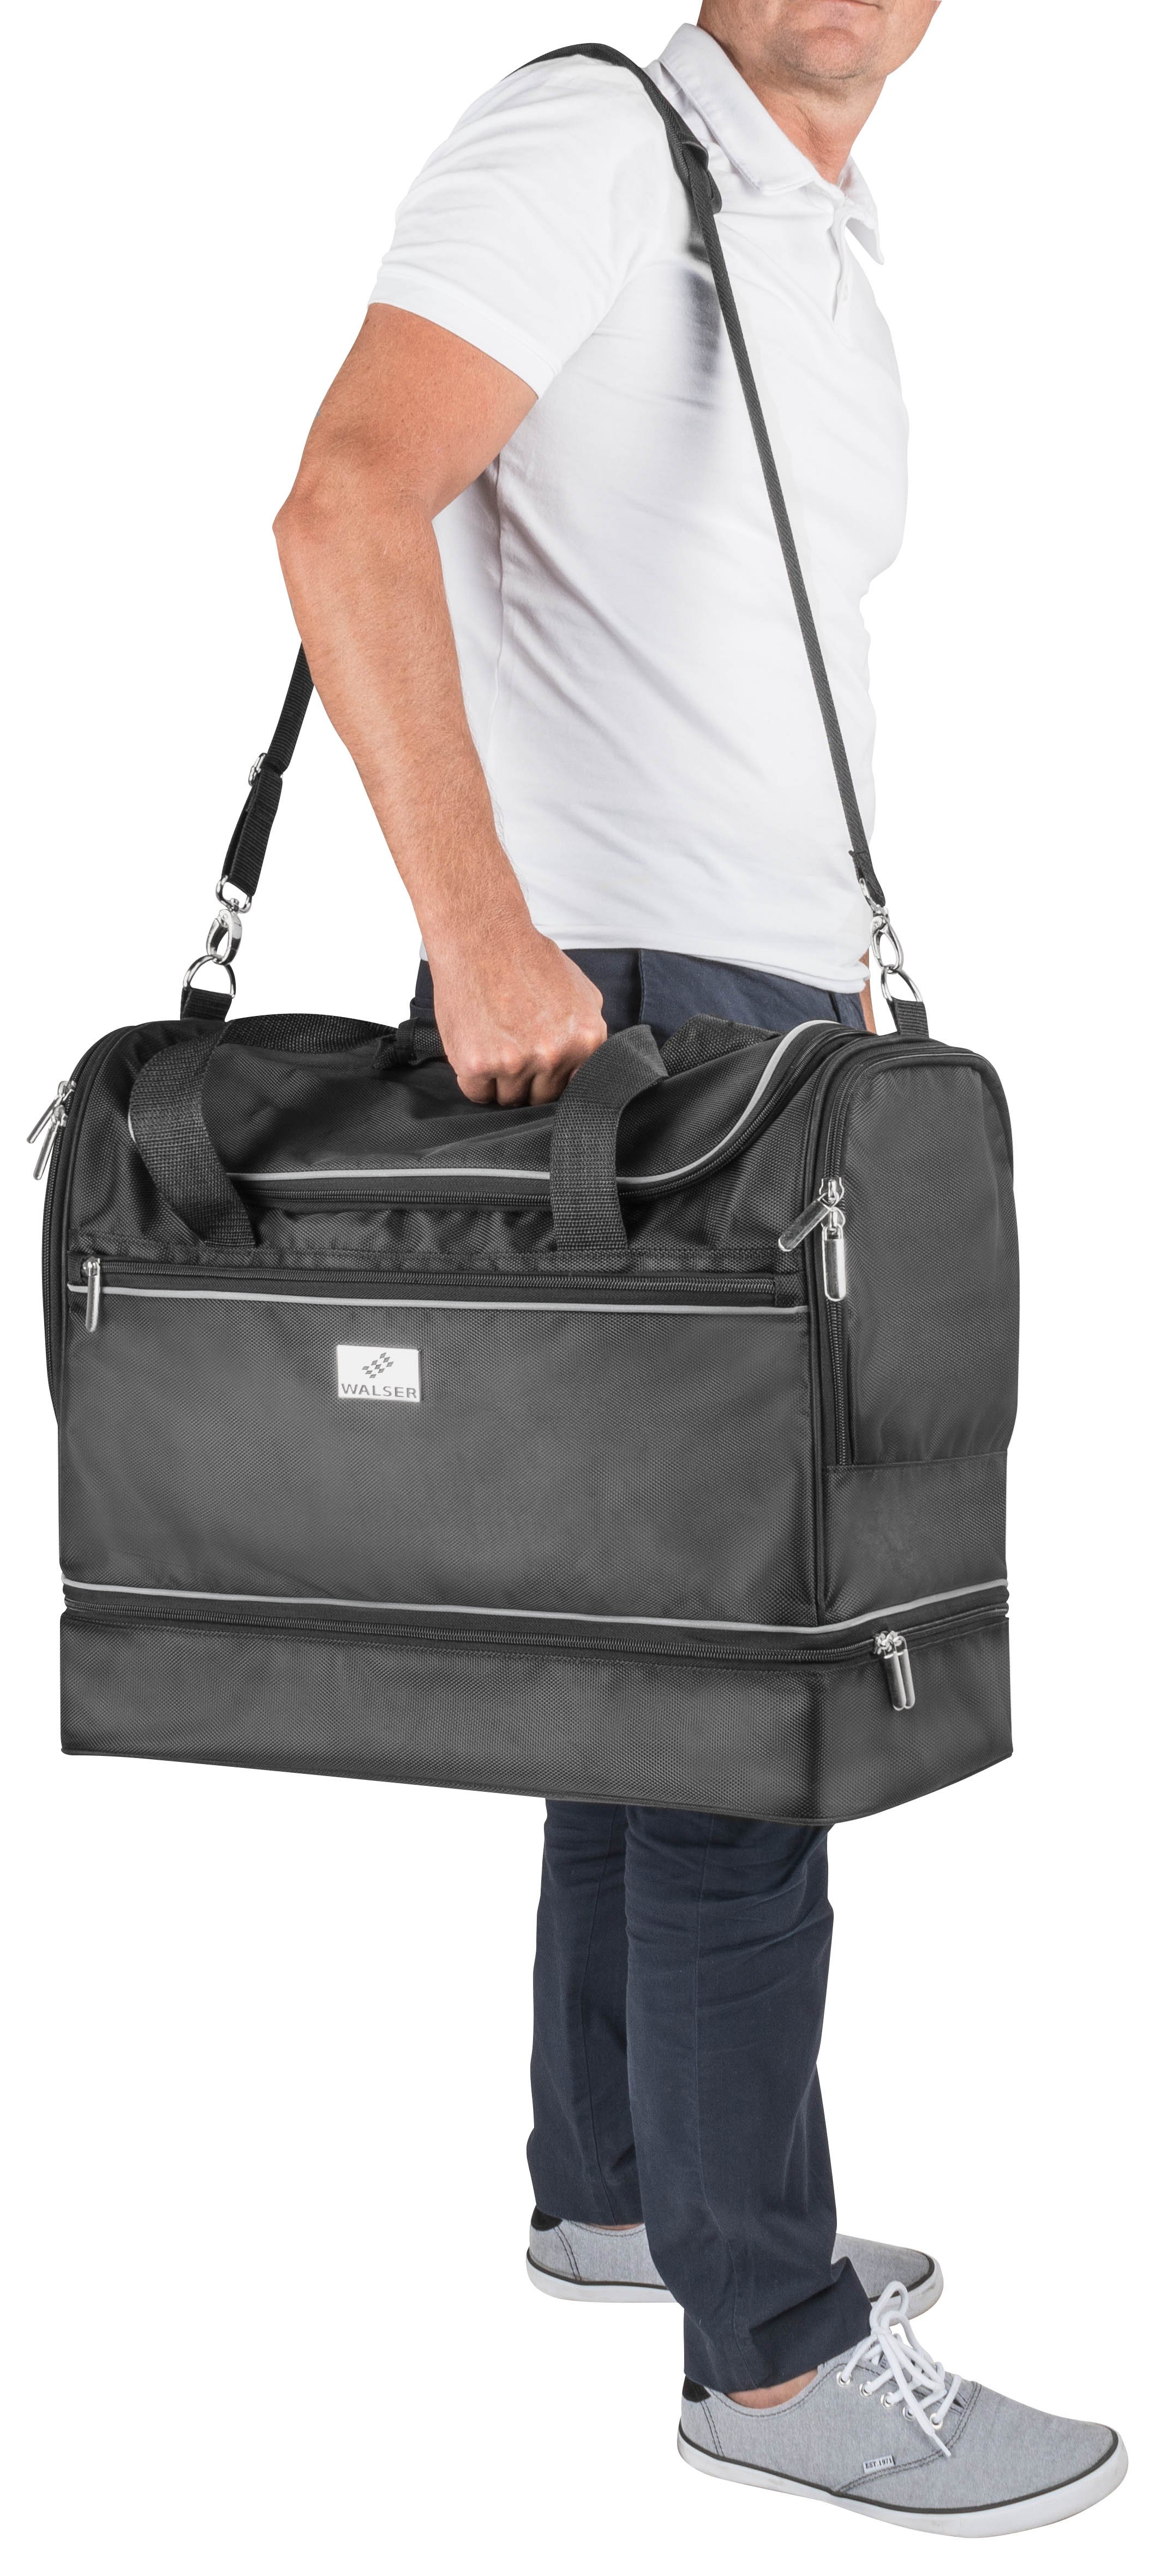 Carbags sports bag 60L - 40x30x45cm